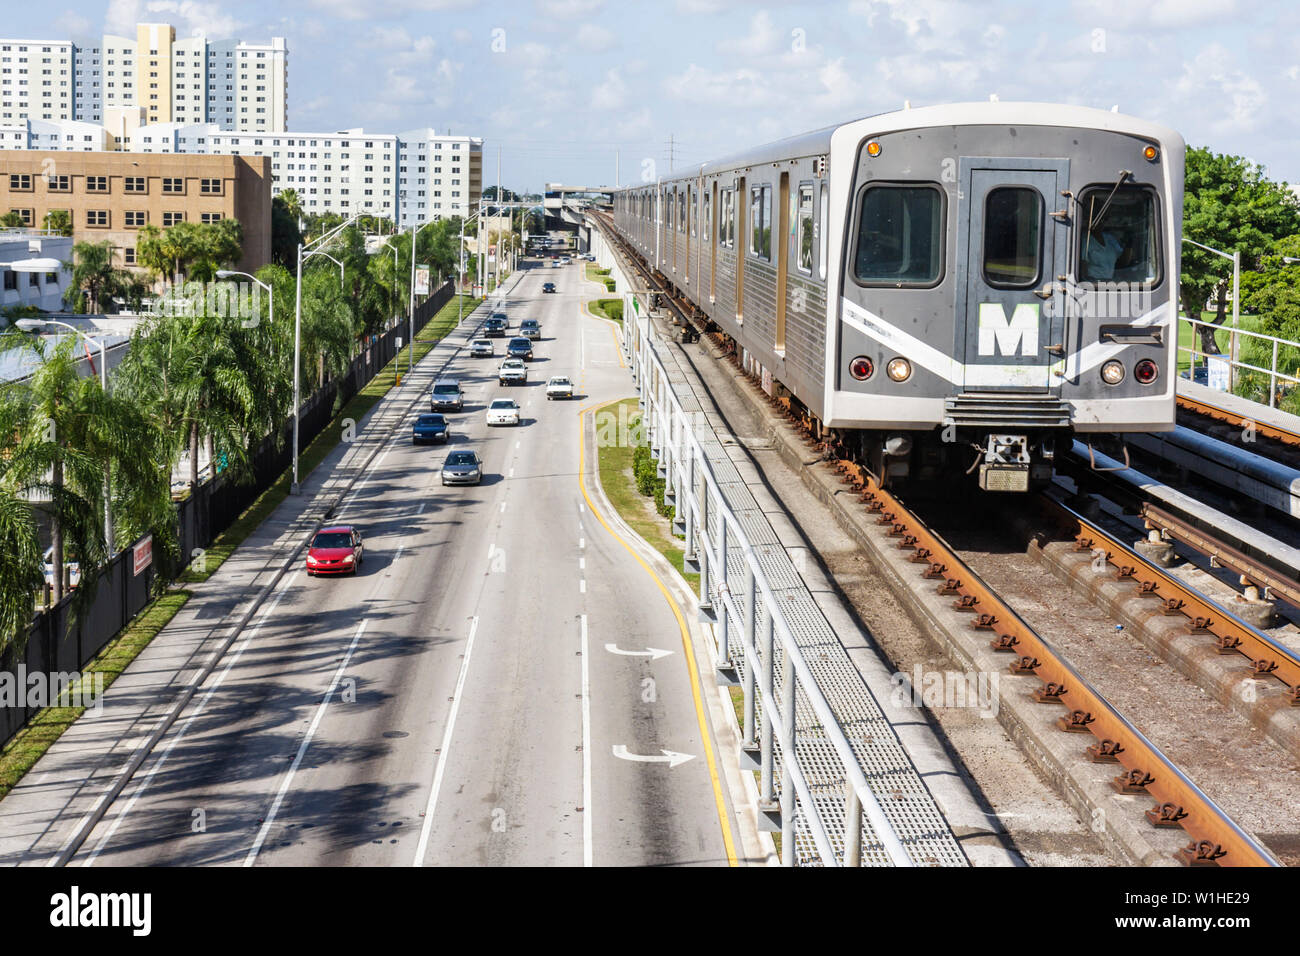 Miami Florida, Civic Center Metrorail Station, NW 12th Avenue, Mass Transit, sistema ferroviario sopraelevato, treno, strada, traffico, auto, FL091015018 Foto Stock